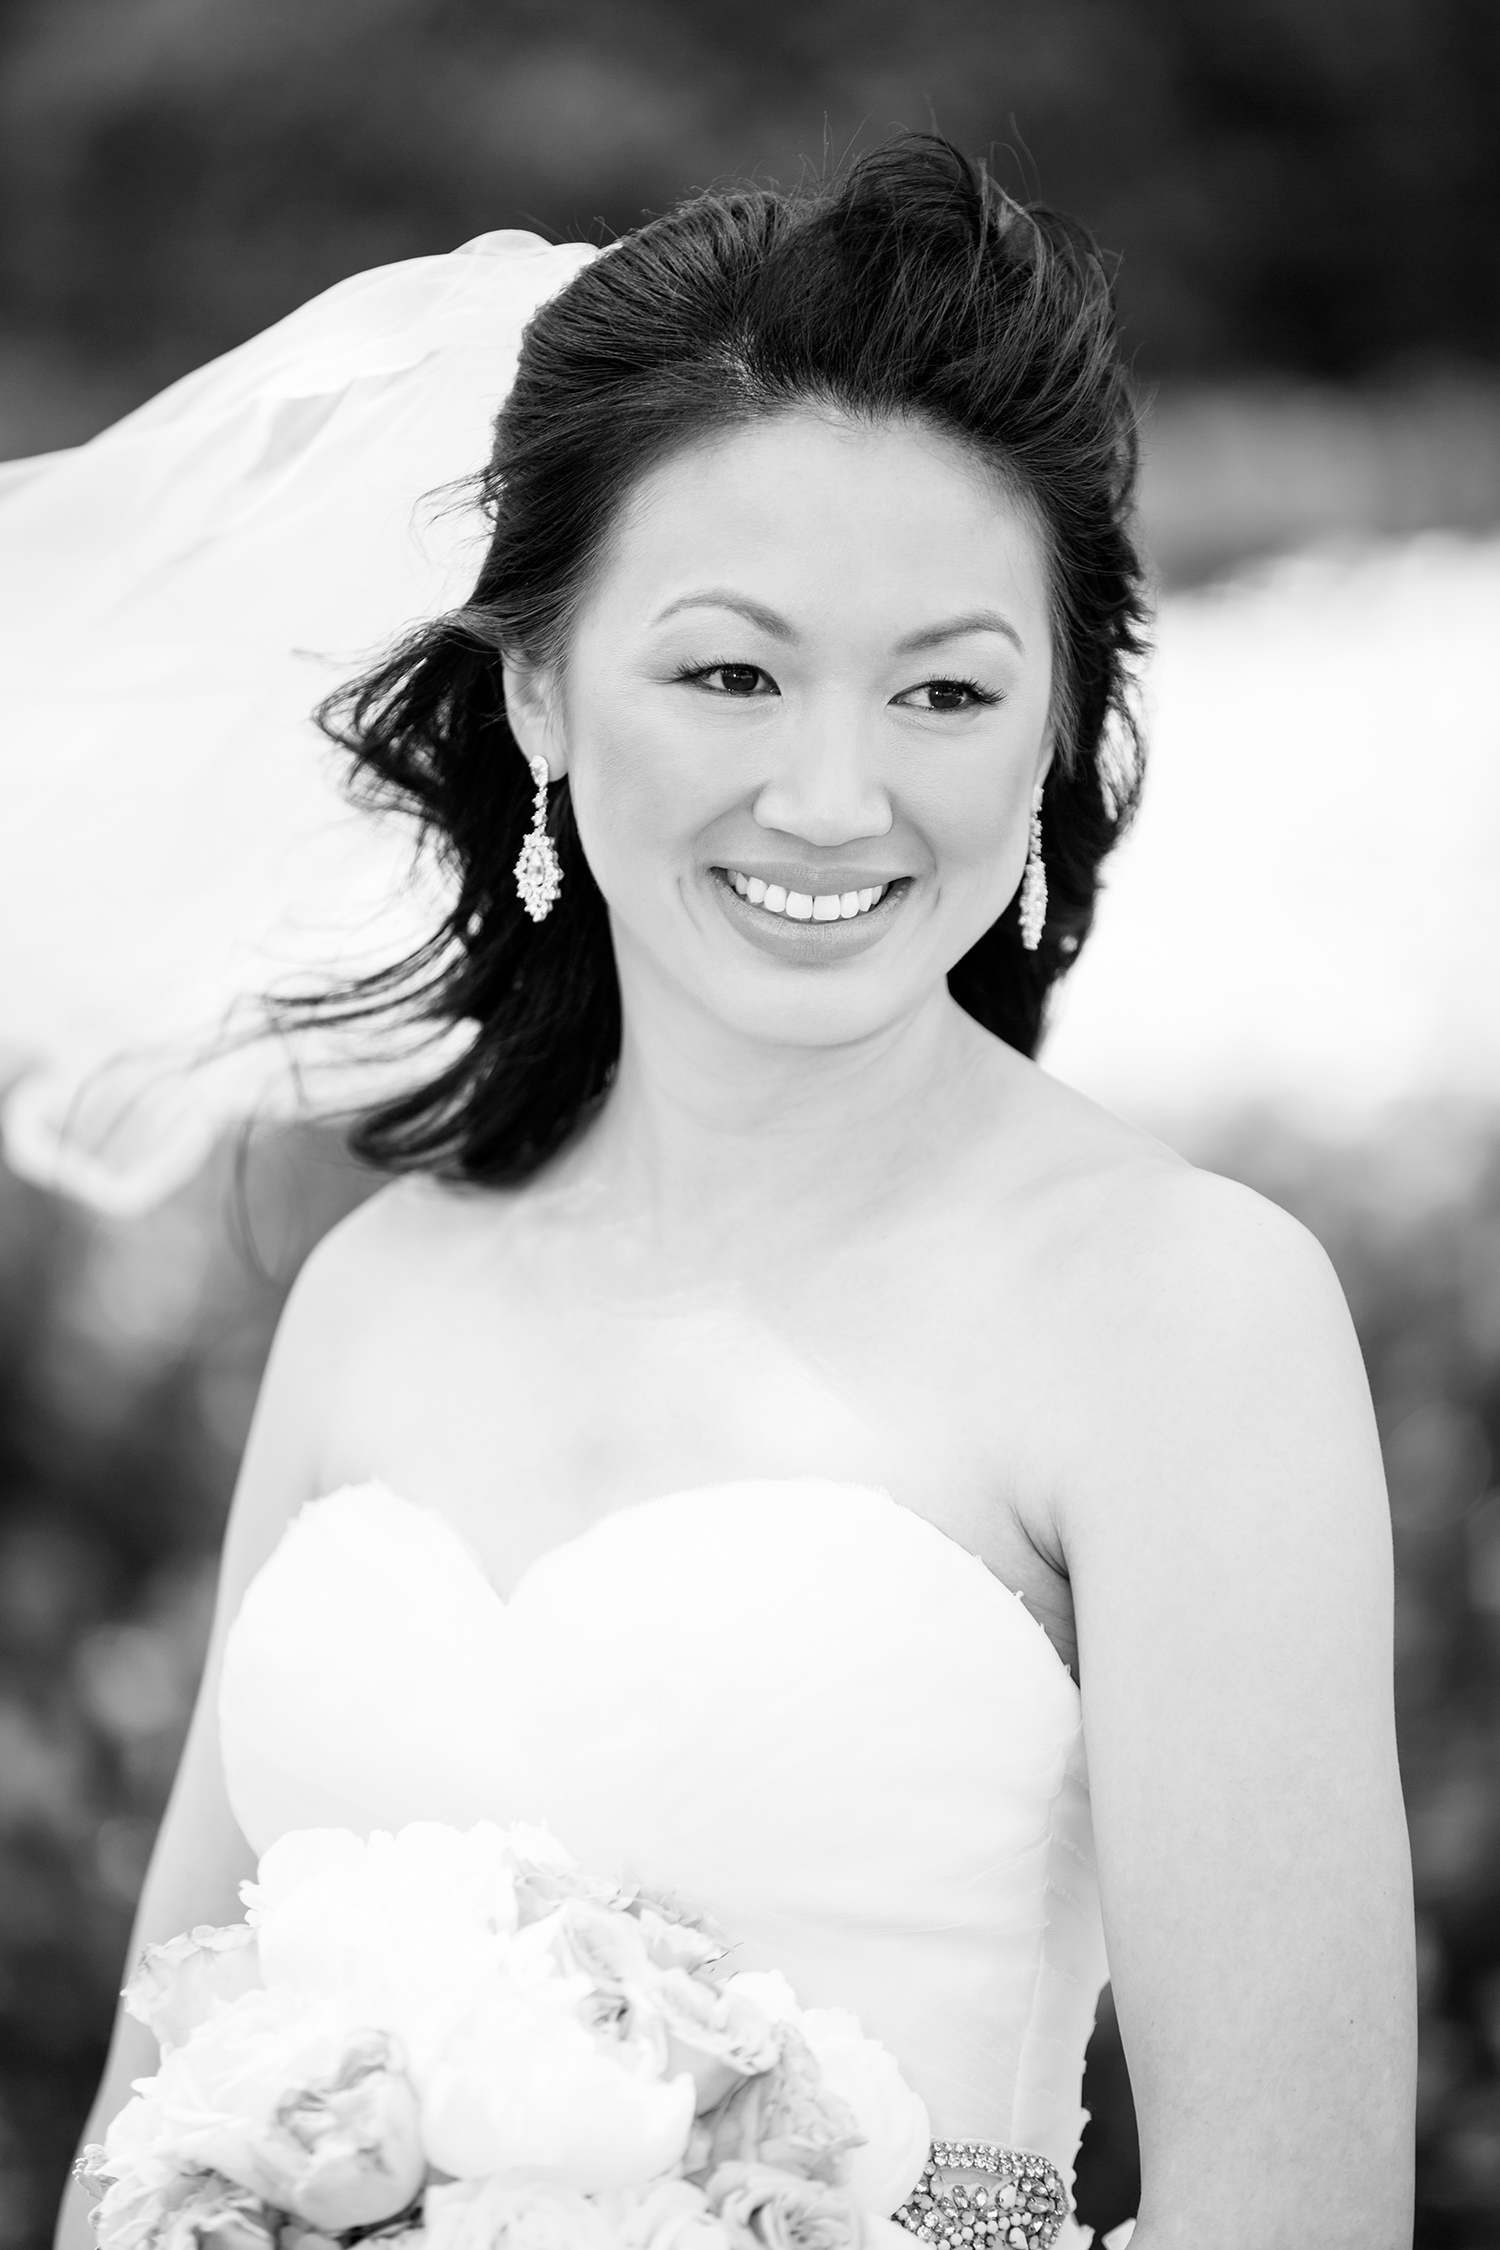 5 Reasons You Should Have Bridal Portraits Taken - Image Property of www.j-dphoto.com